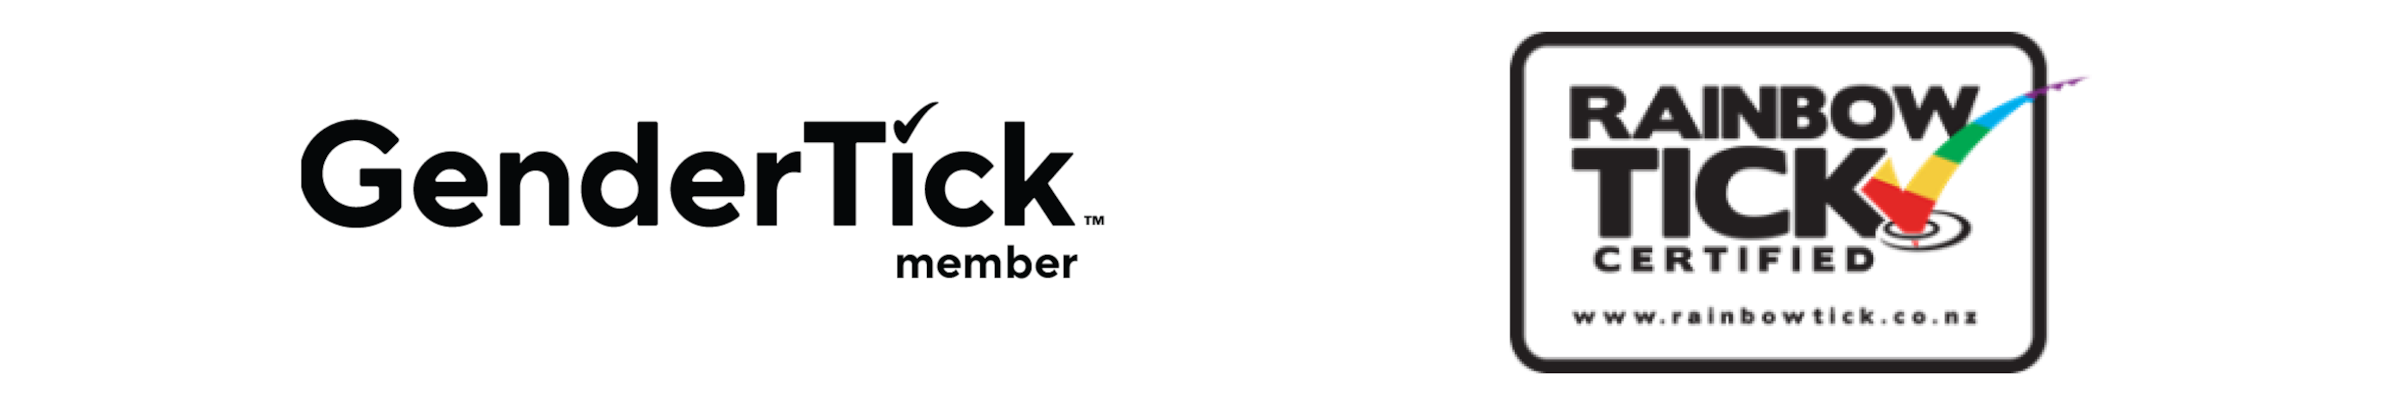 GenderTick member logo and Rainbow Tick certified logo